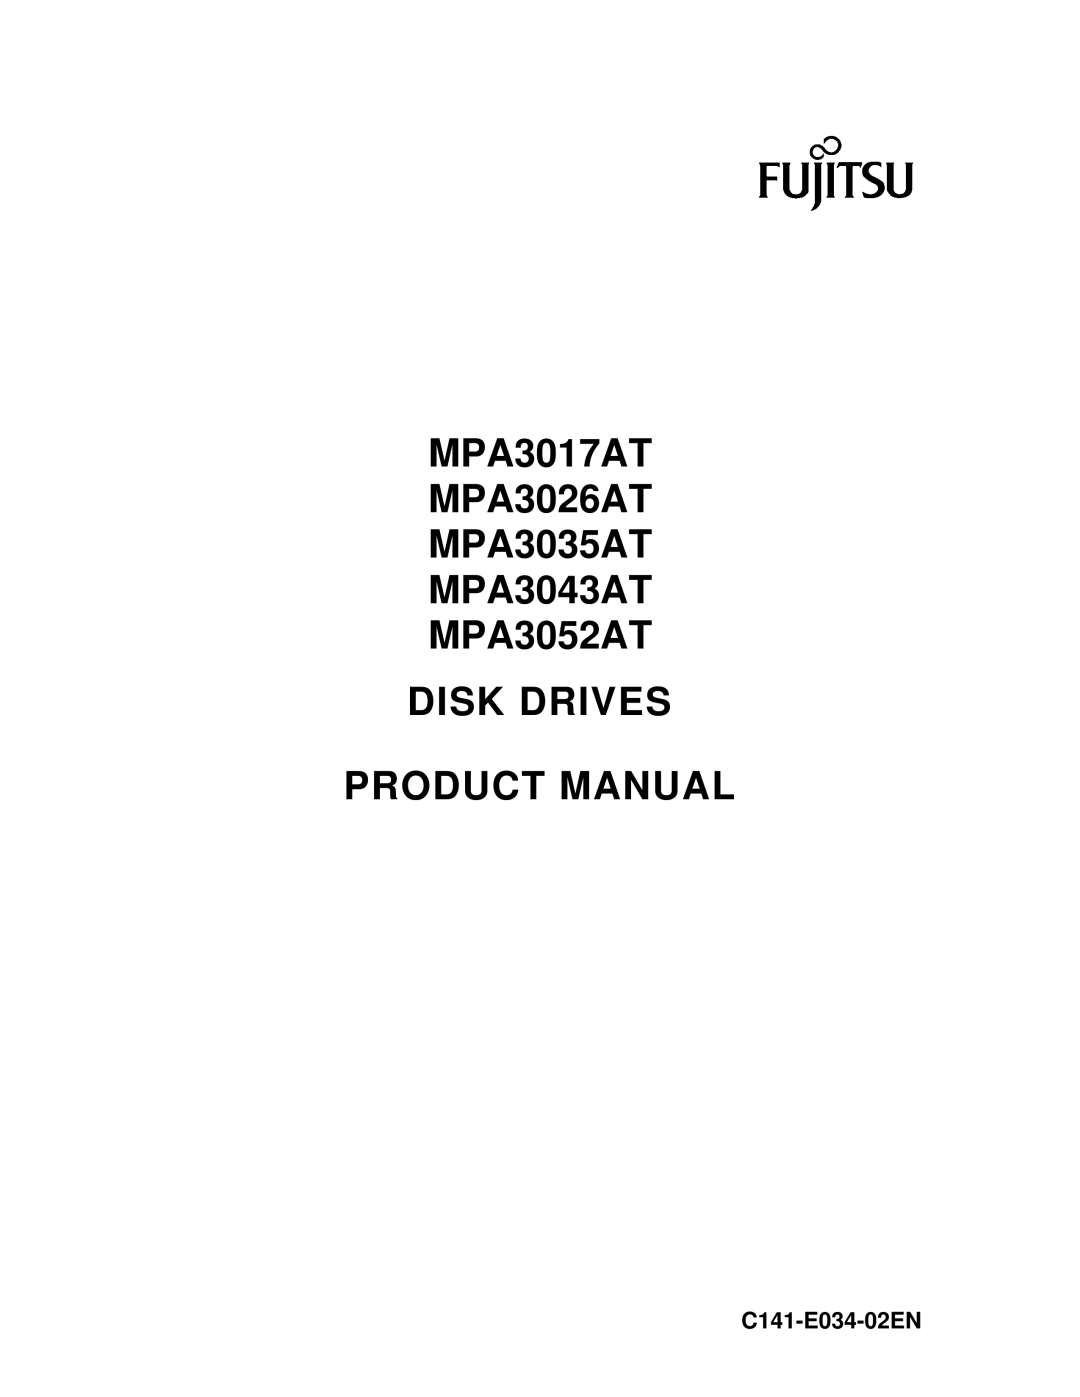 Fujitsu manual MPA3017AT MPA3026AT MPA3035AT MPA3043AT MPA3052AT DISK DRIVES, Product Manual, C141-E034-02EN 